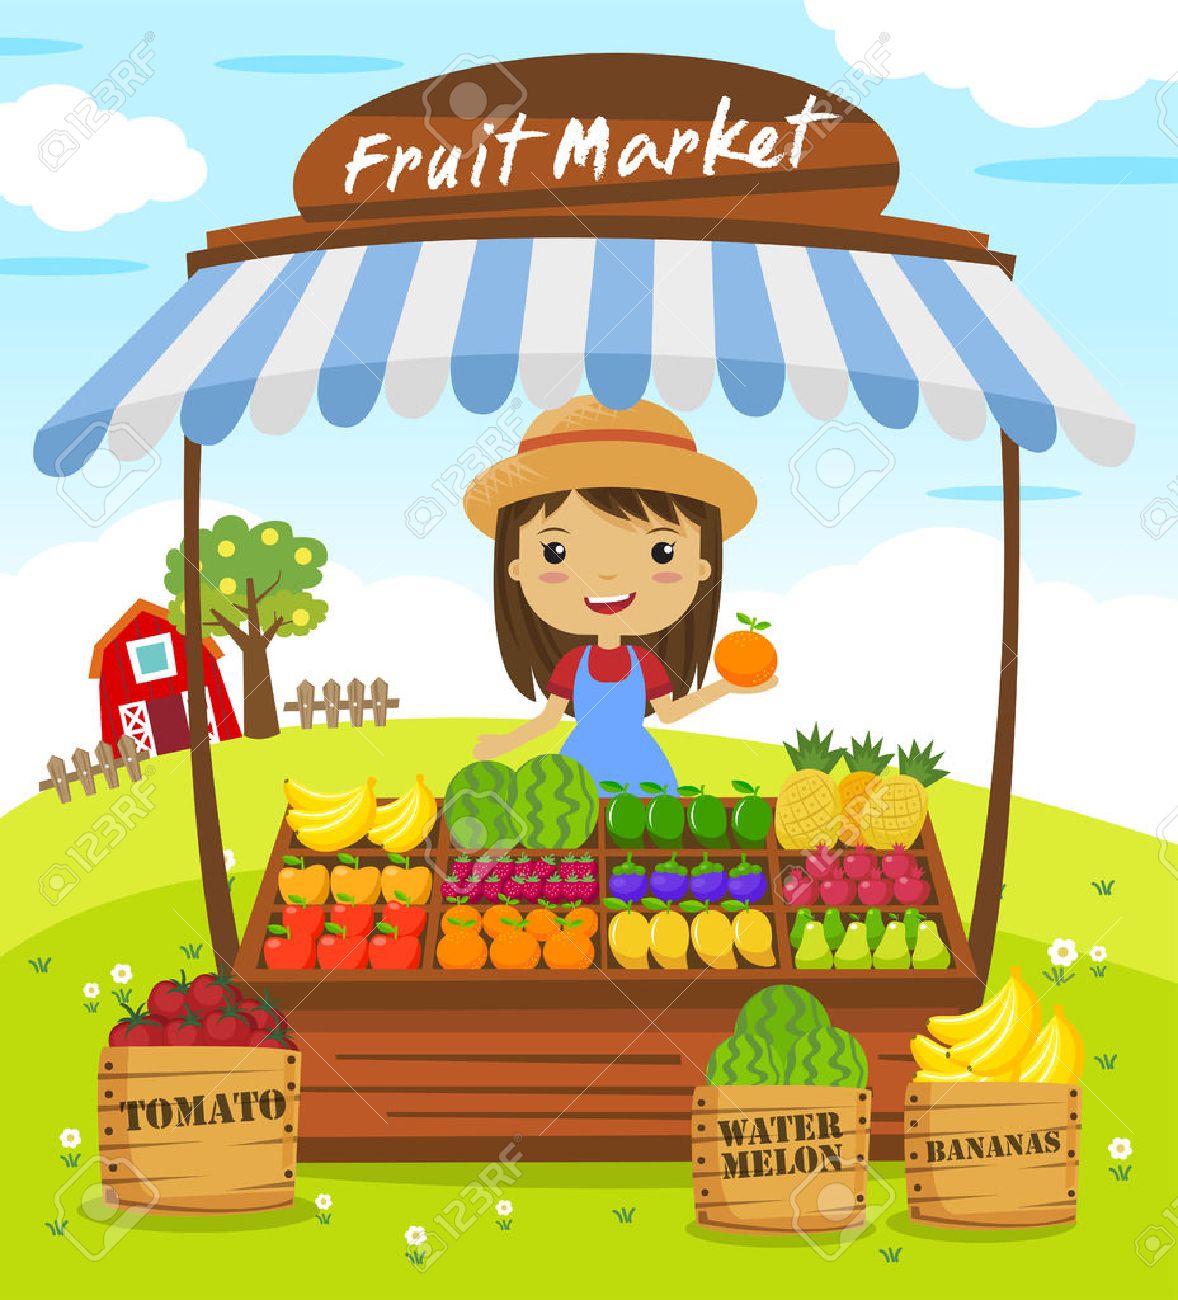 Trading in Fruit Market